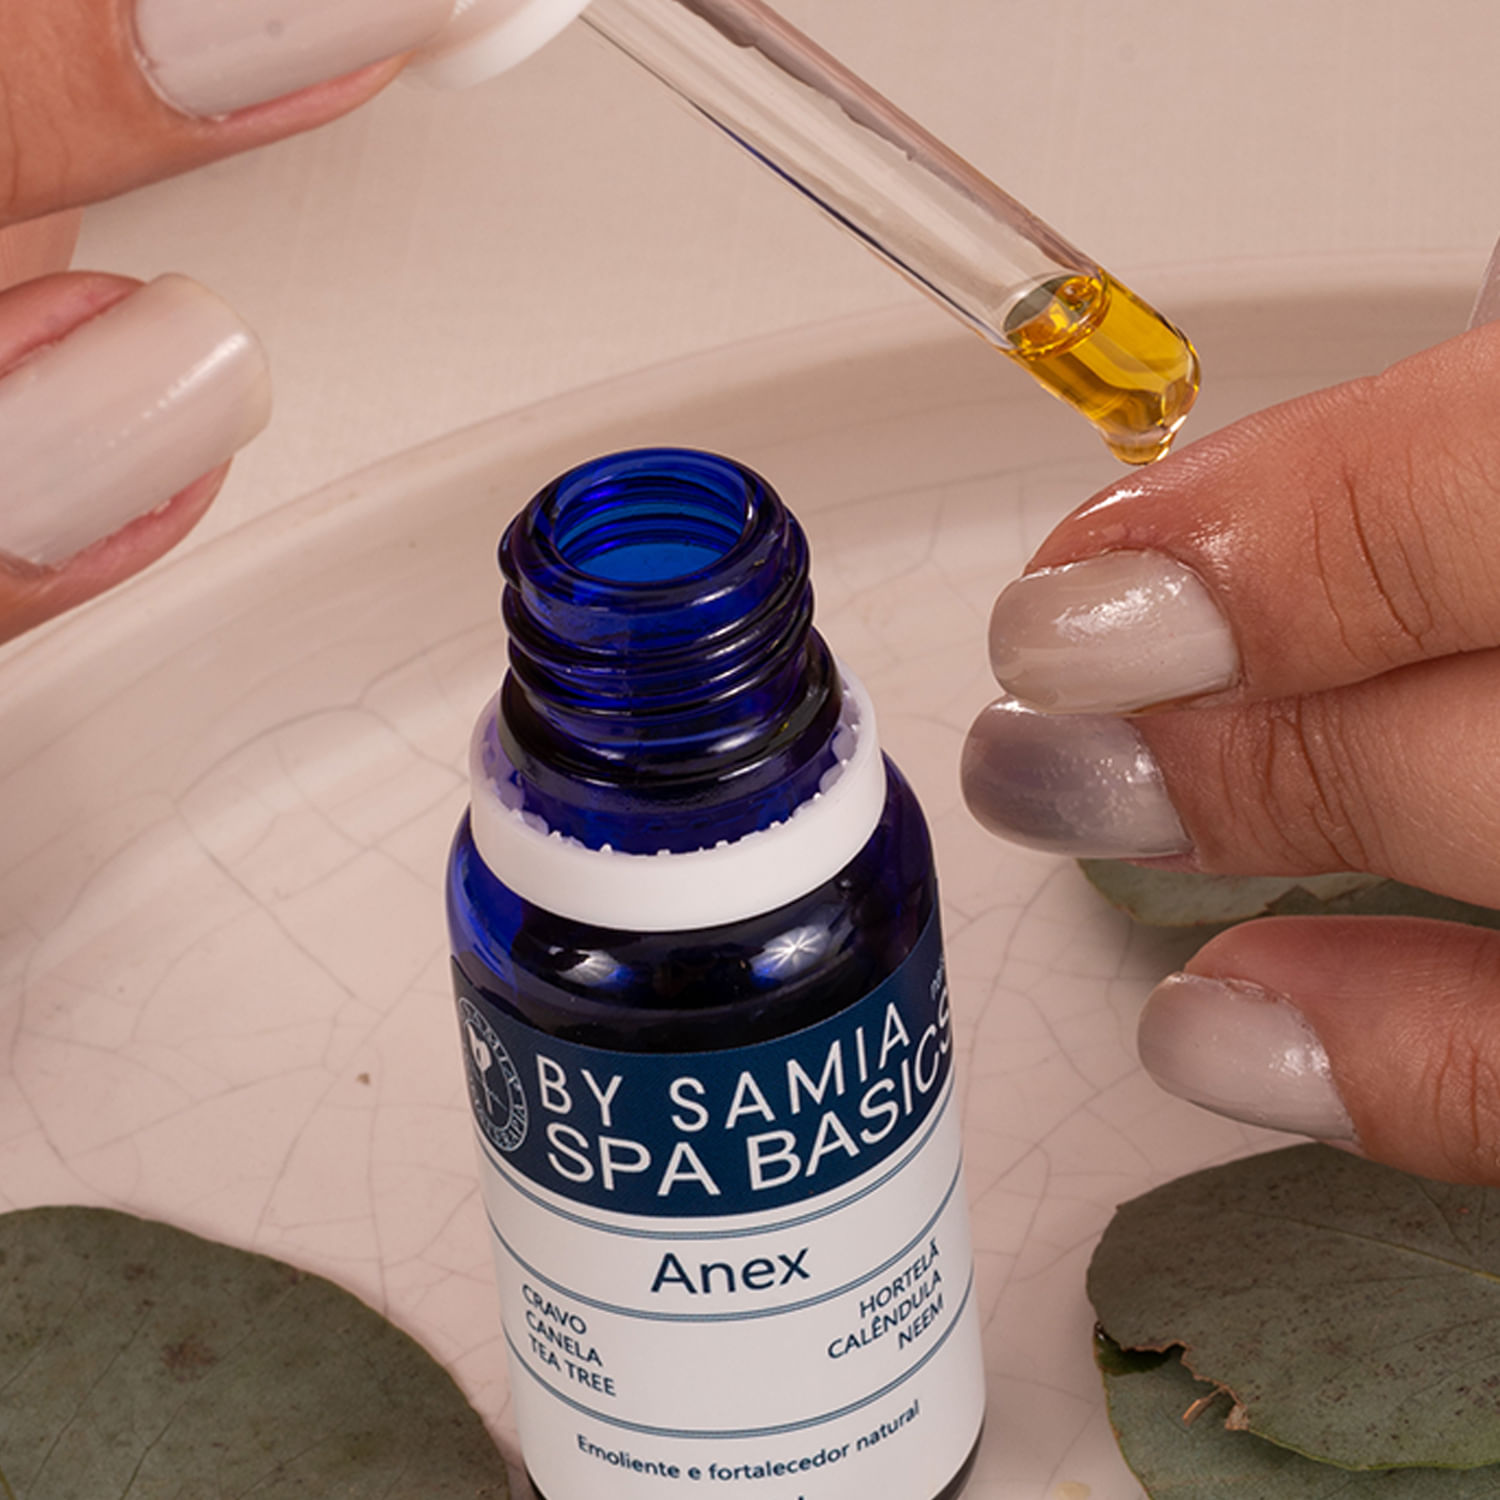 spa-basic-anex-bysamia-aromaterapia-arranjo